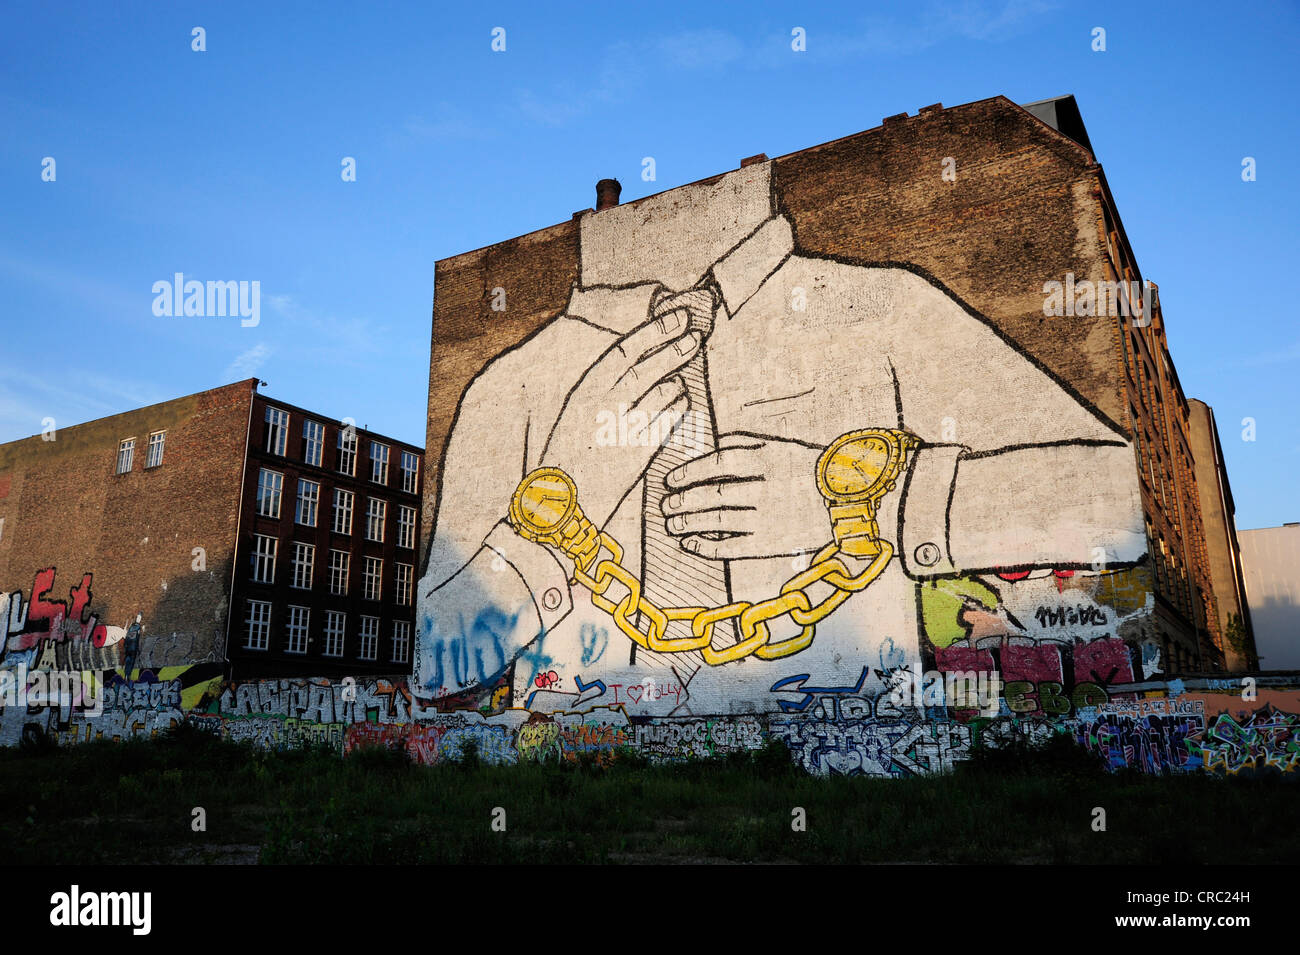 Street art by the artist Blu, graffiti on a house in Kreuzberg Schlesisches Tor, Berlin, Germany, Europe Stock Photo